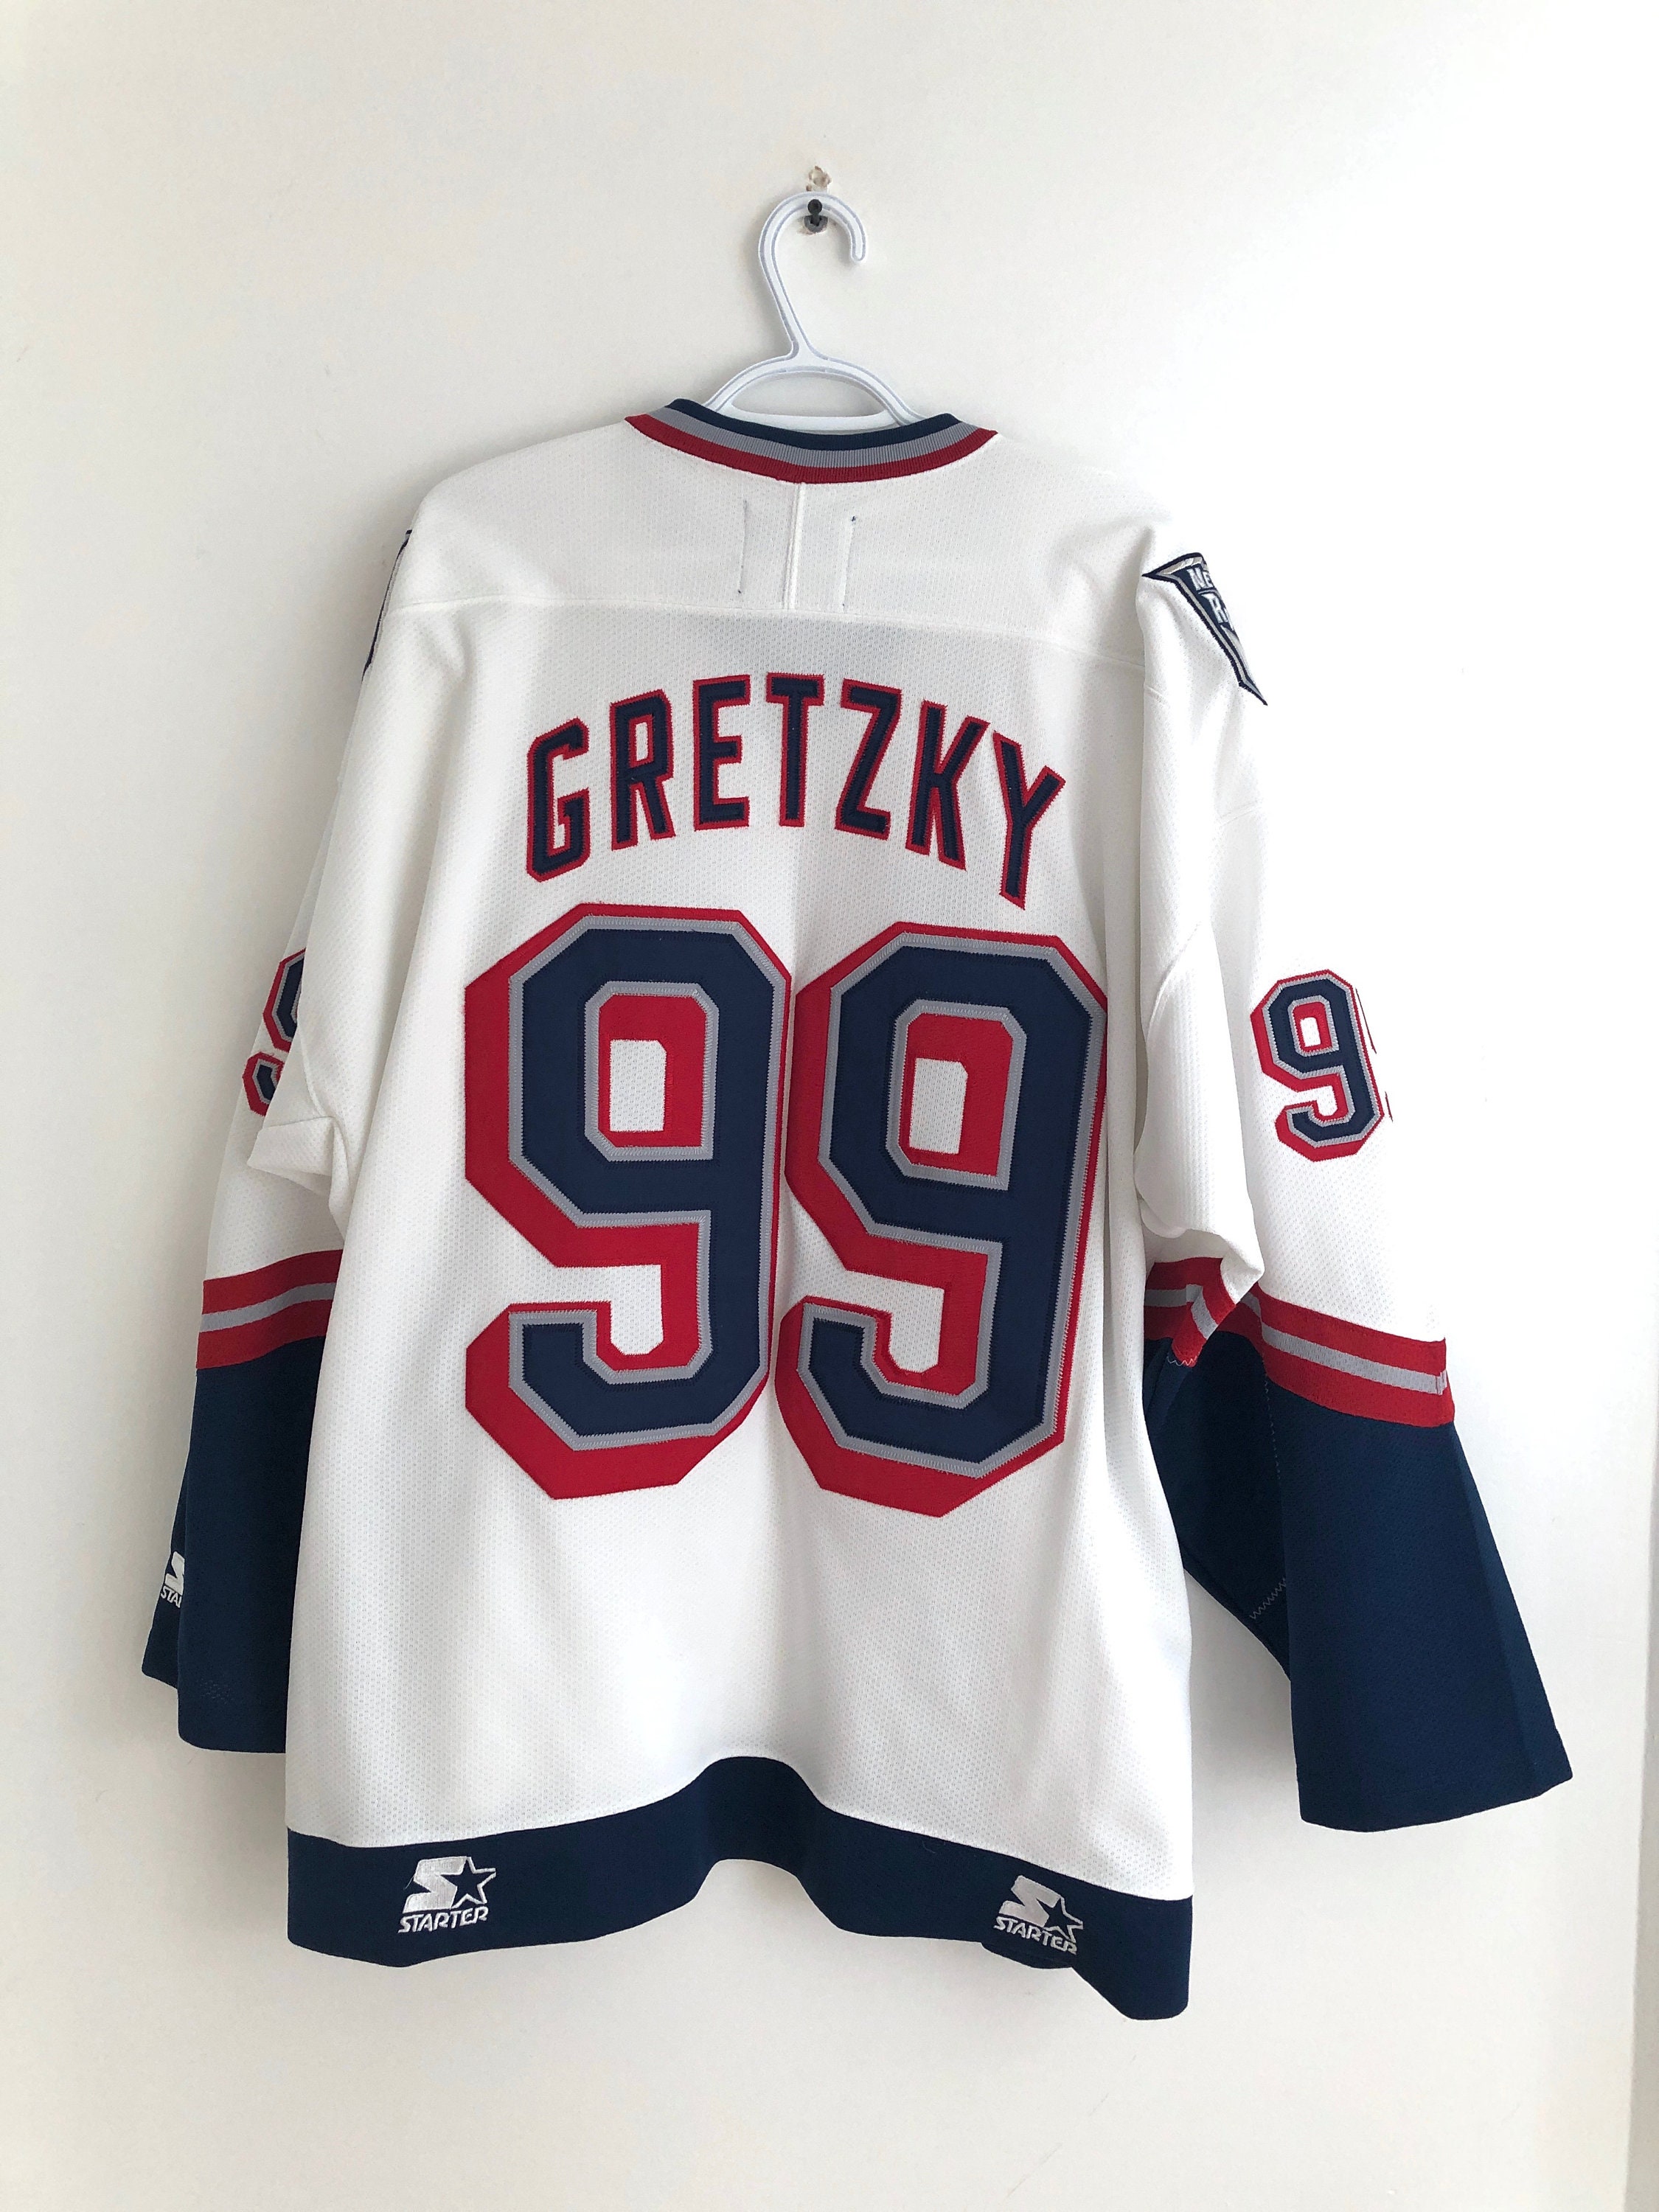 Wayne Gretzky Signed Rangers Liberty Jersey (Gretzky COA)